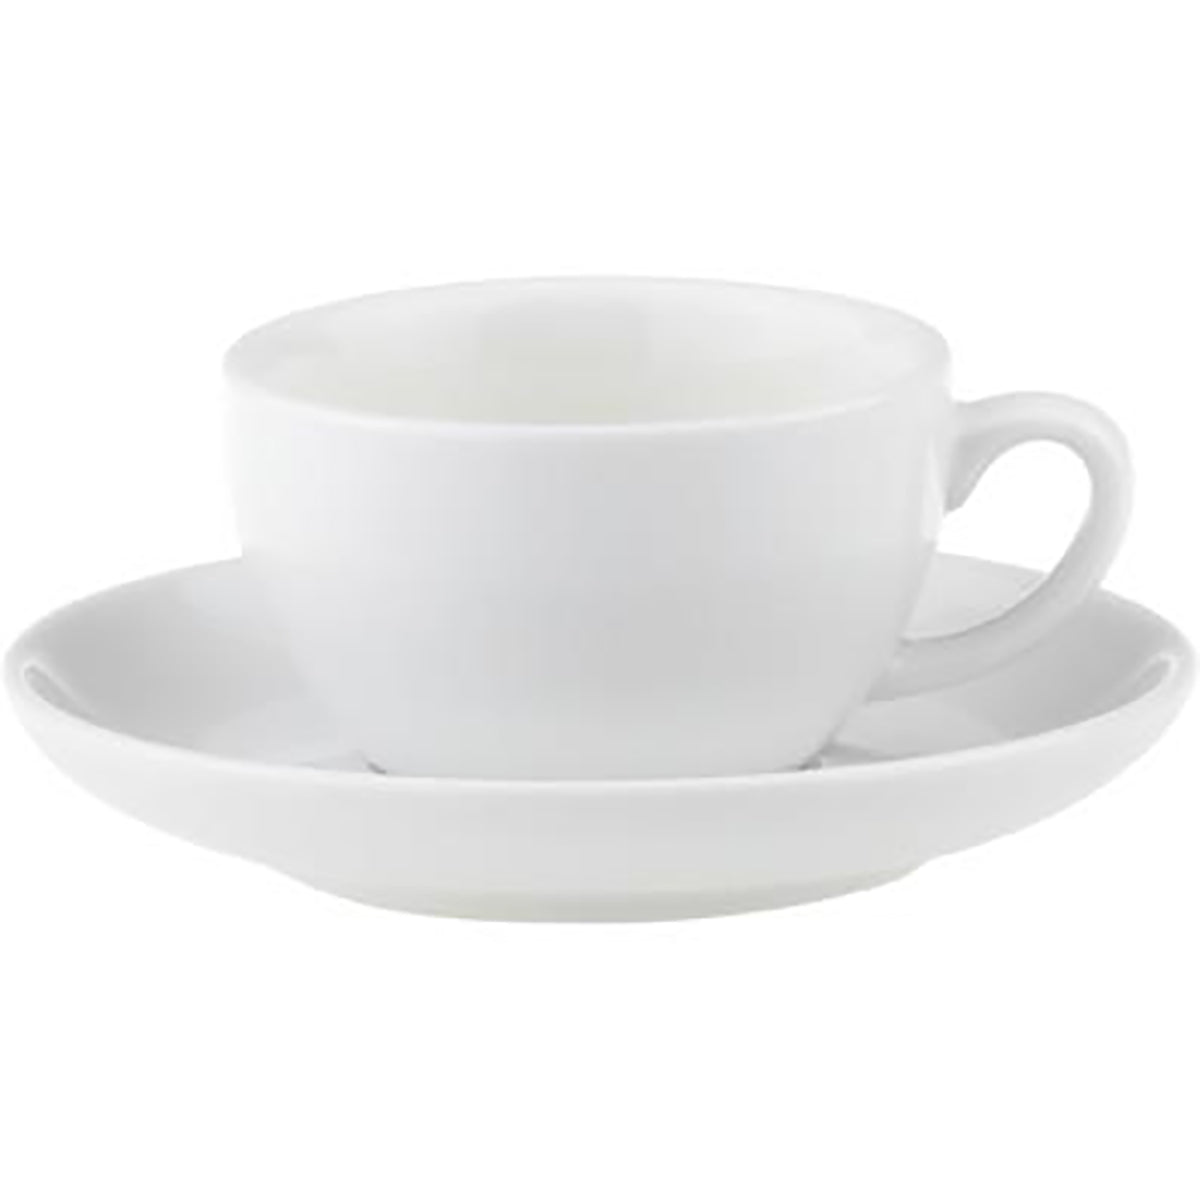 94160 Royal Porcelain Chelsea Espresso Cup 0.9Lt (0280) Tomkin Australia Hospitality Supplies